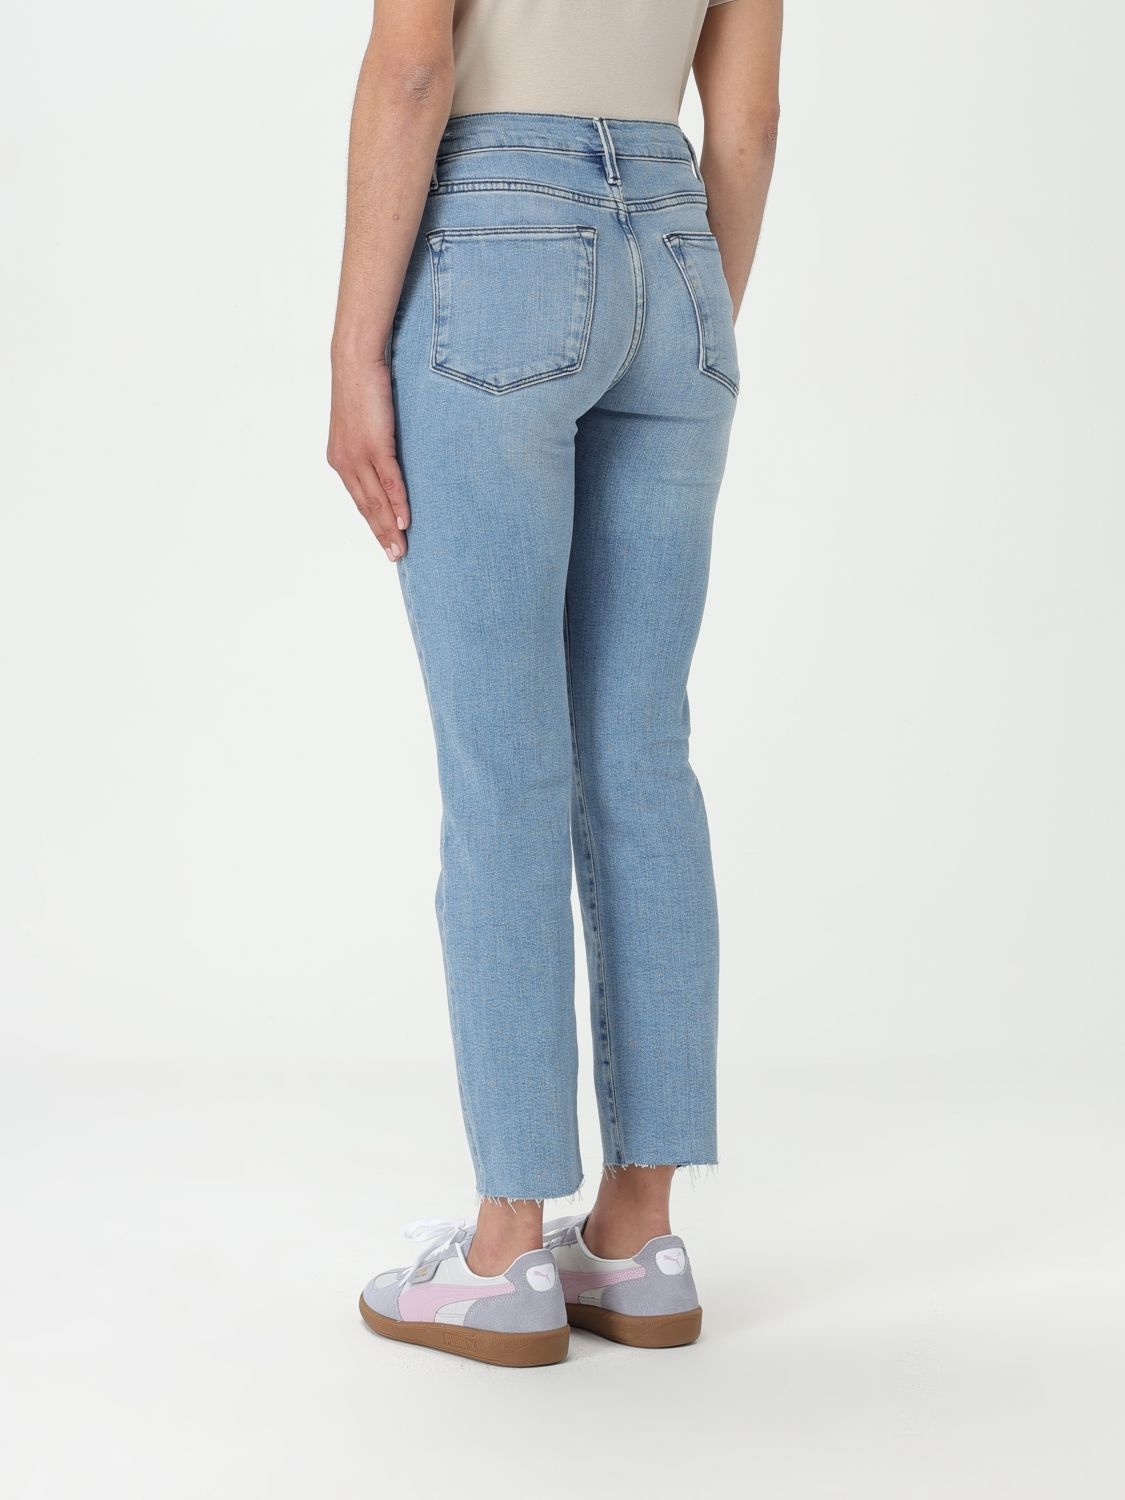 Jeans woman Frame - 2